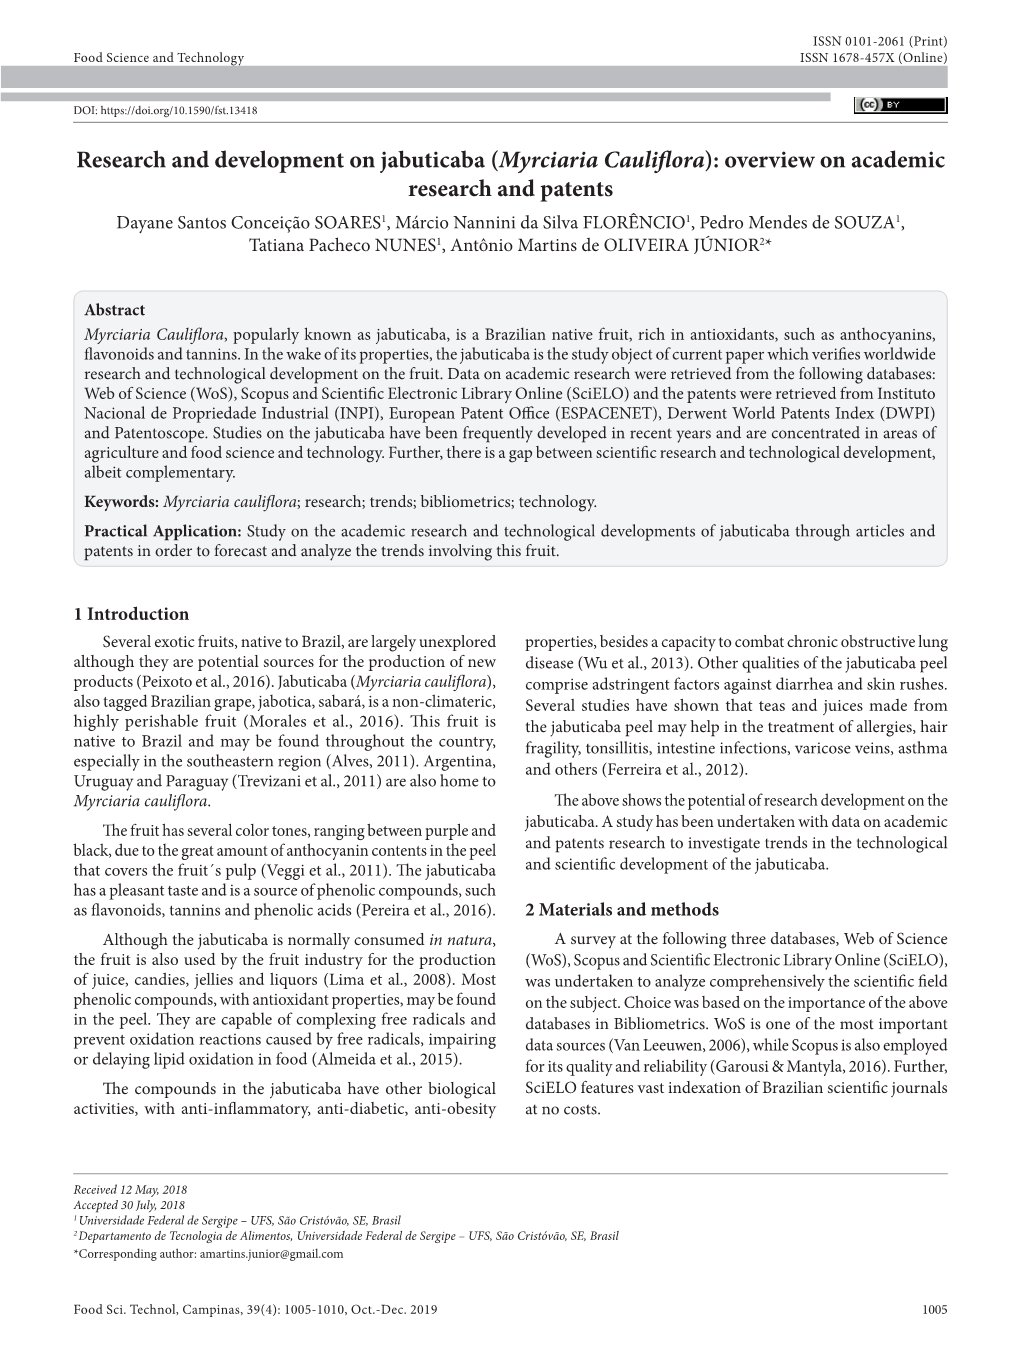 Research and Development on Jabuticaba (Myrciaria Cauliflora)